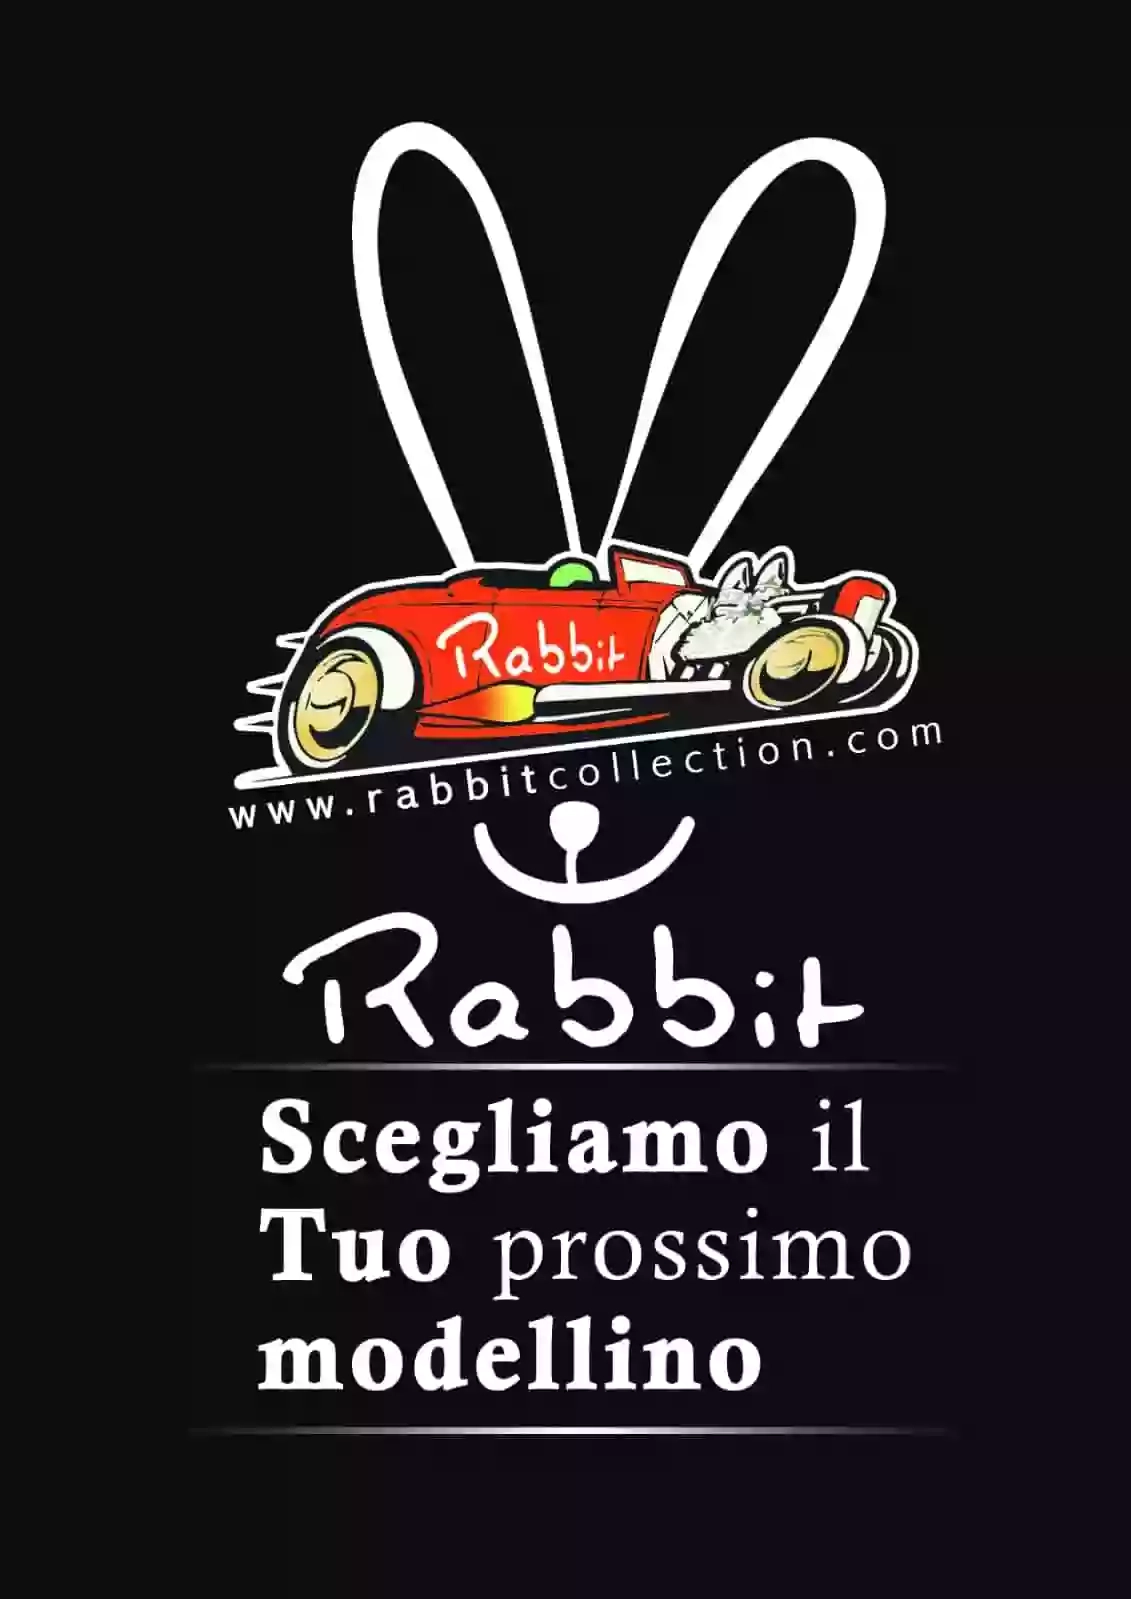 Rabbit Collection